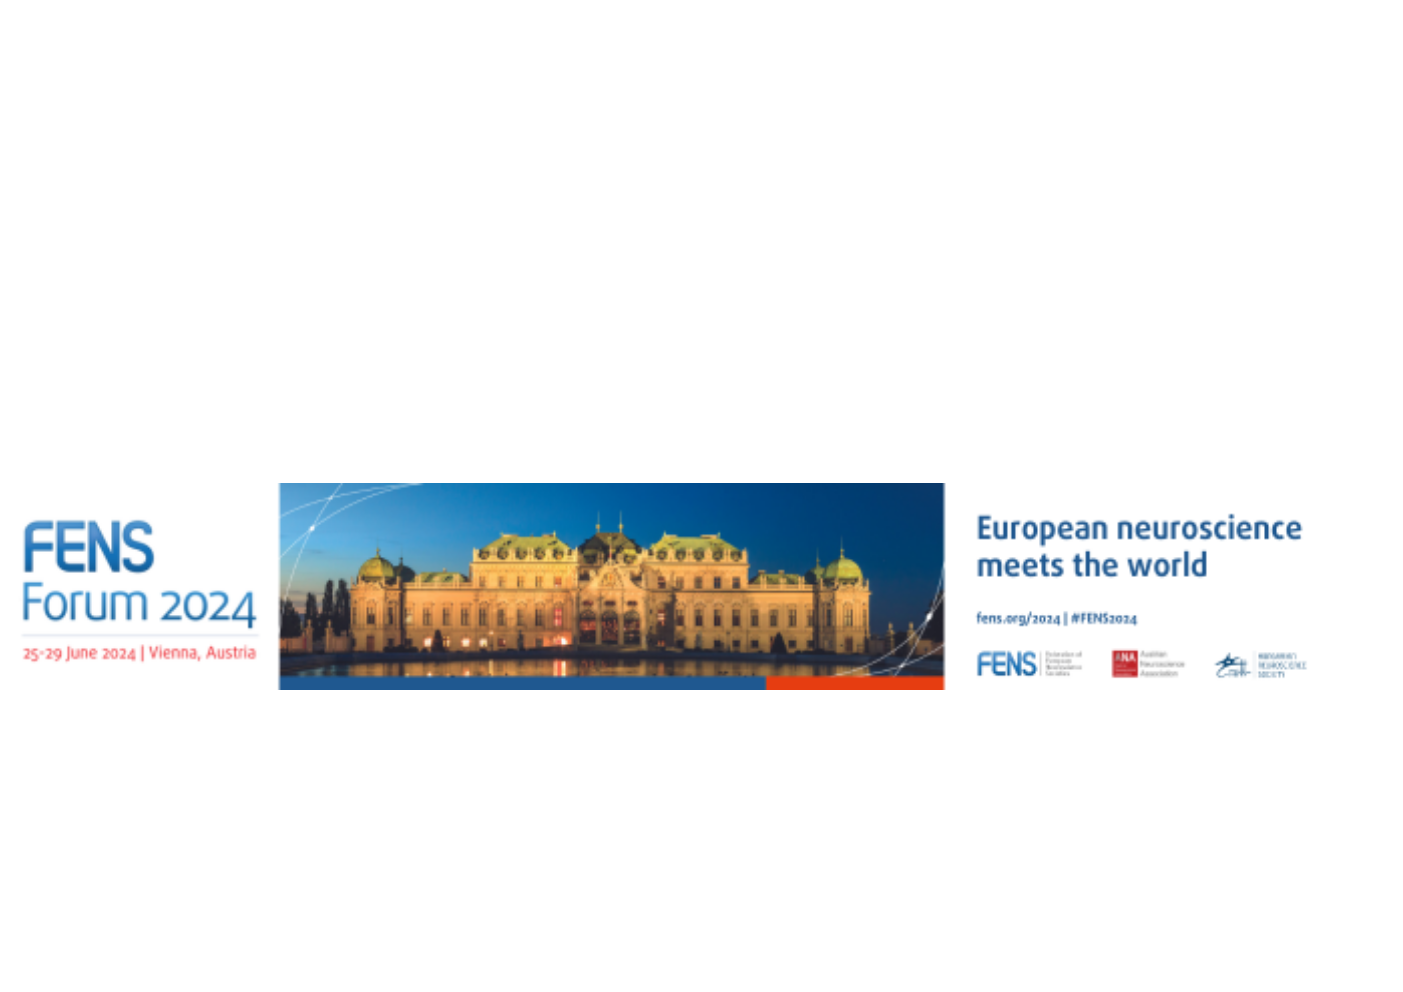 FENS Forum 2024 - more information